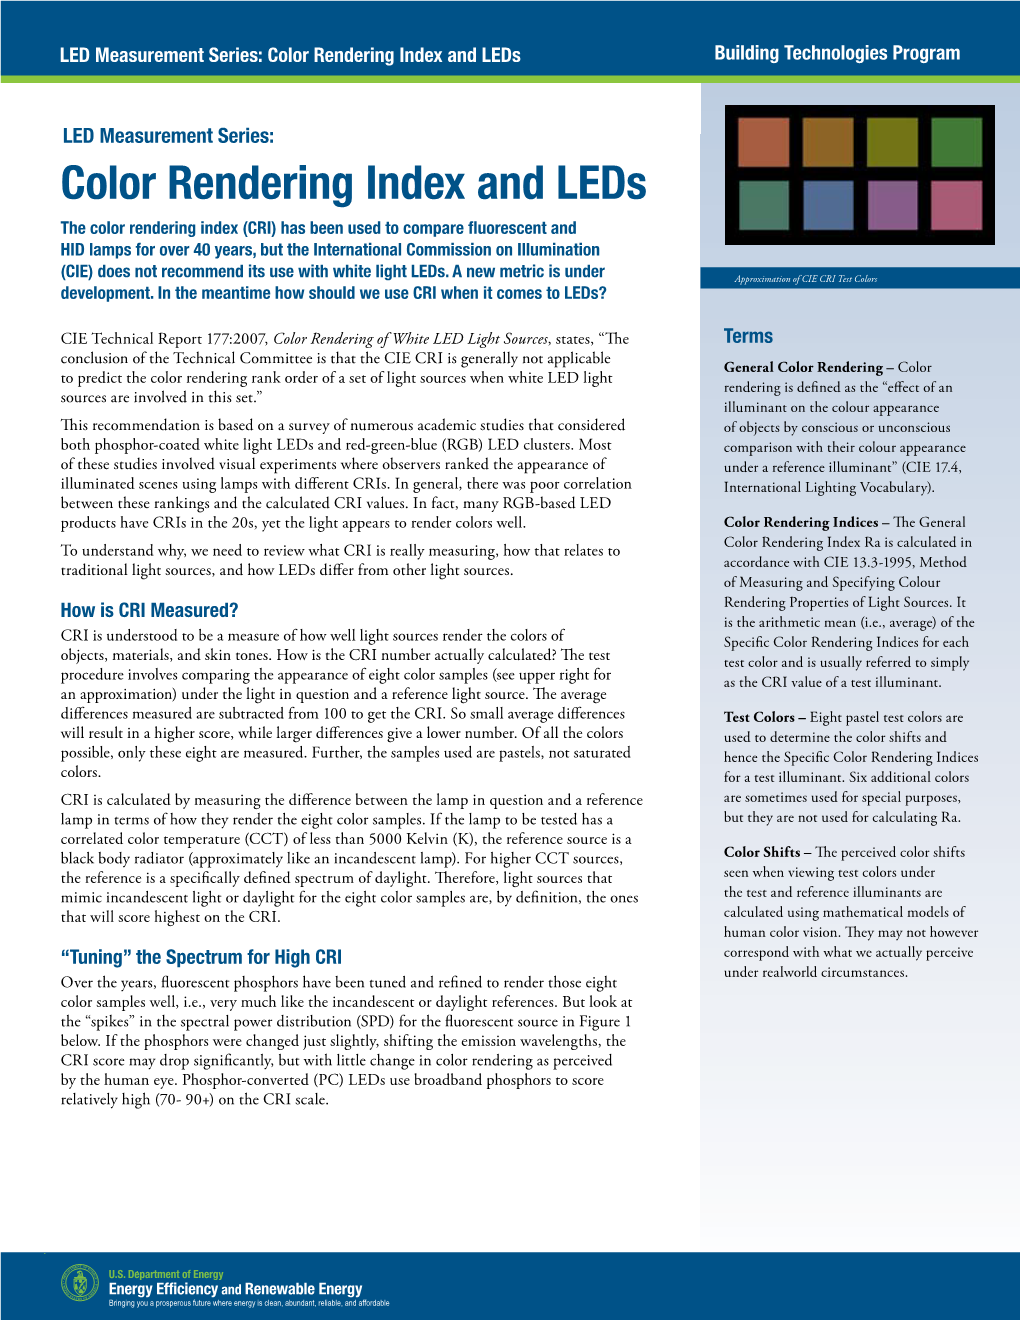 Color Rendering Index and Leds Building Technologies Program